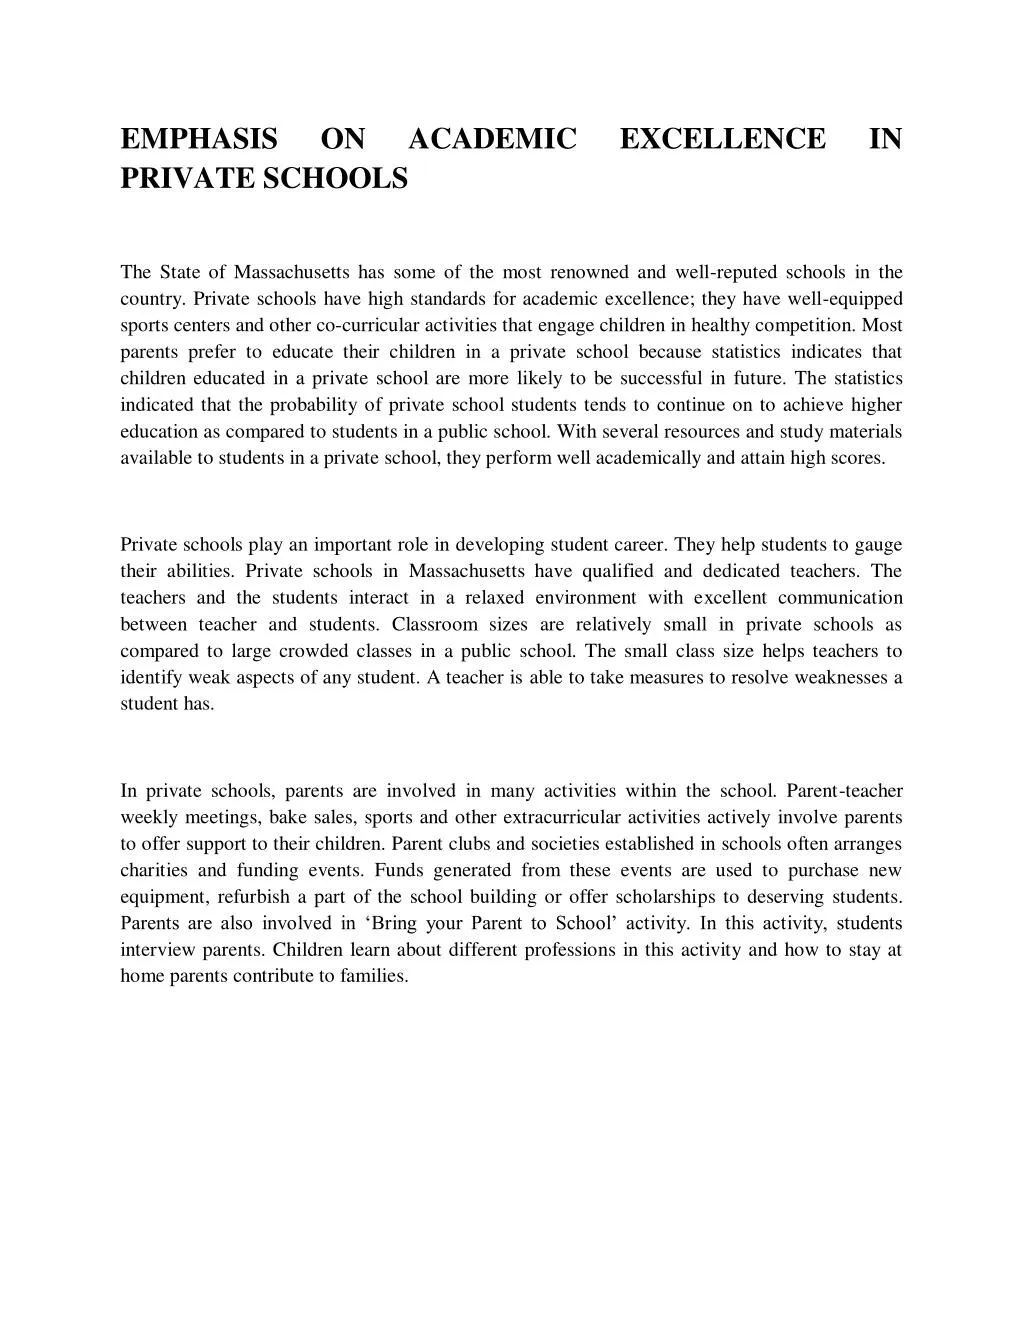 emphasis private schools